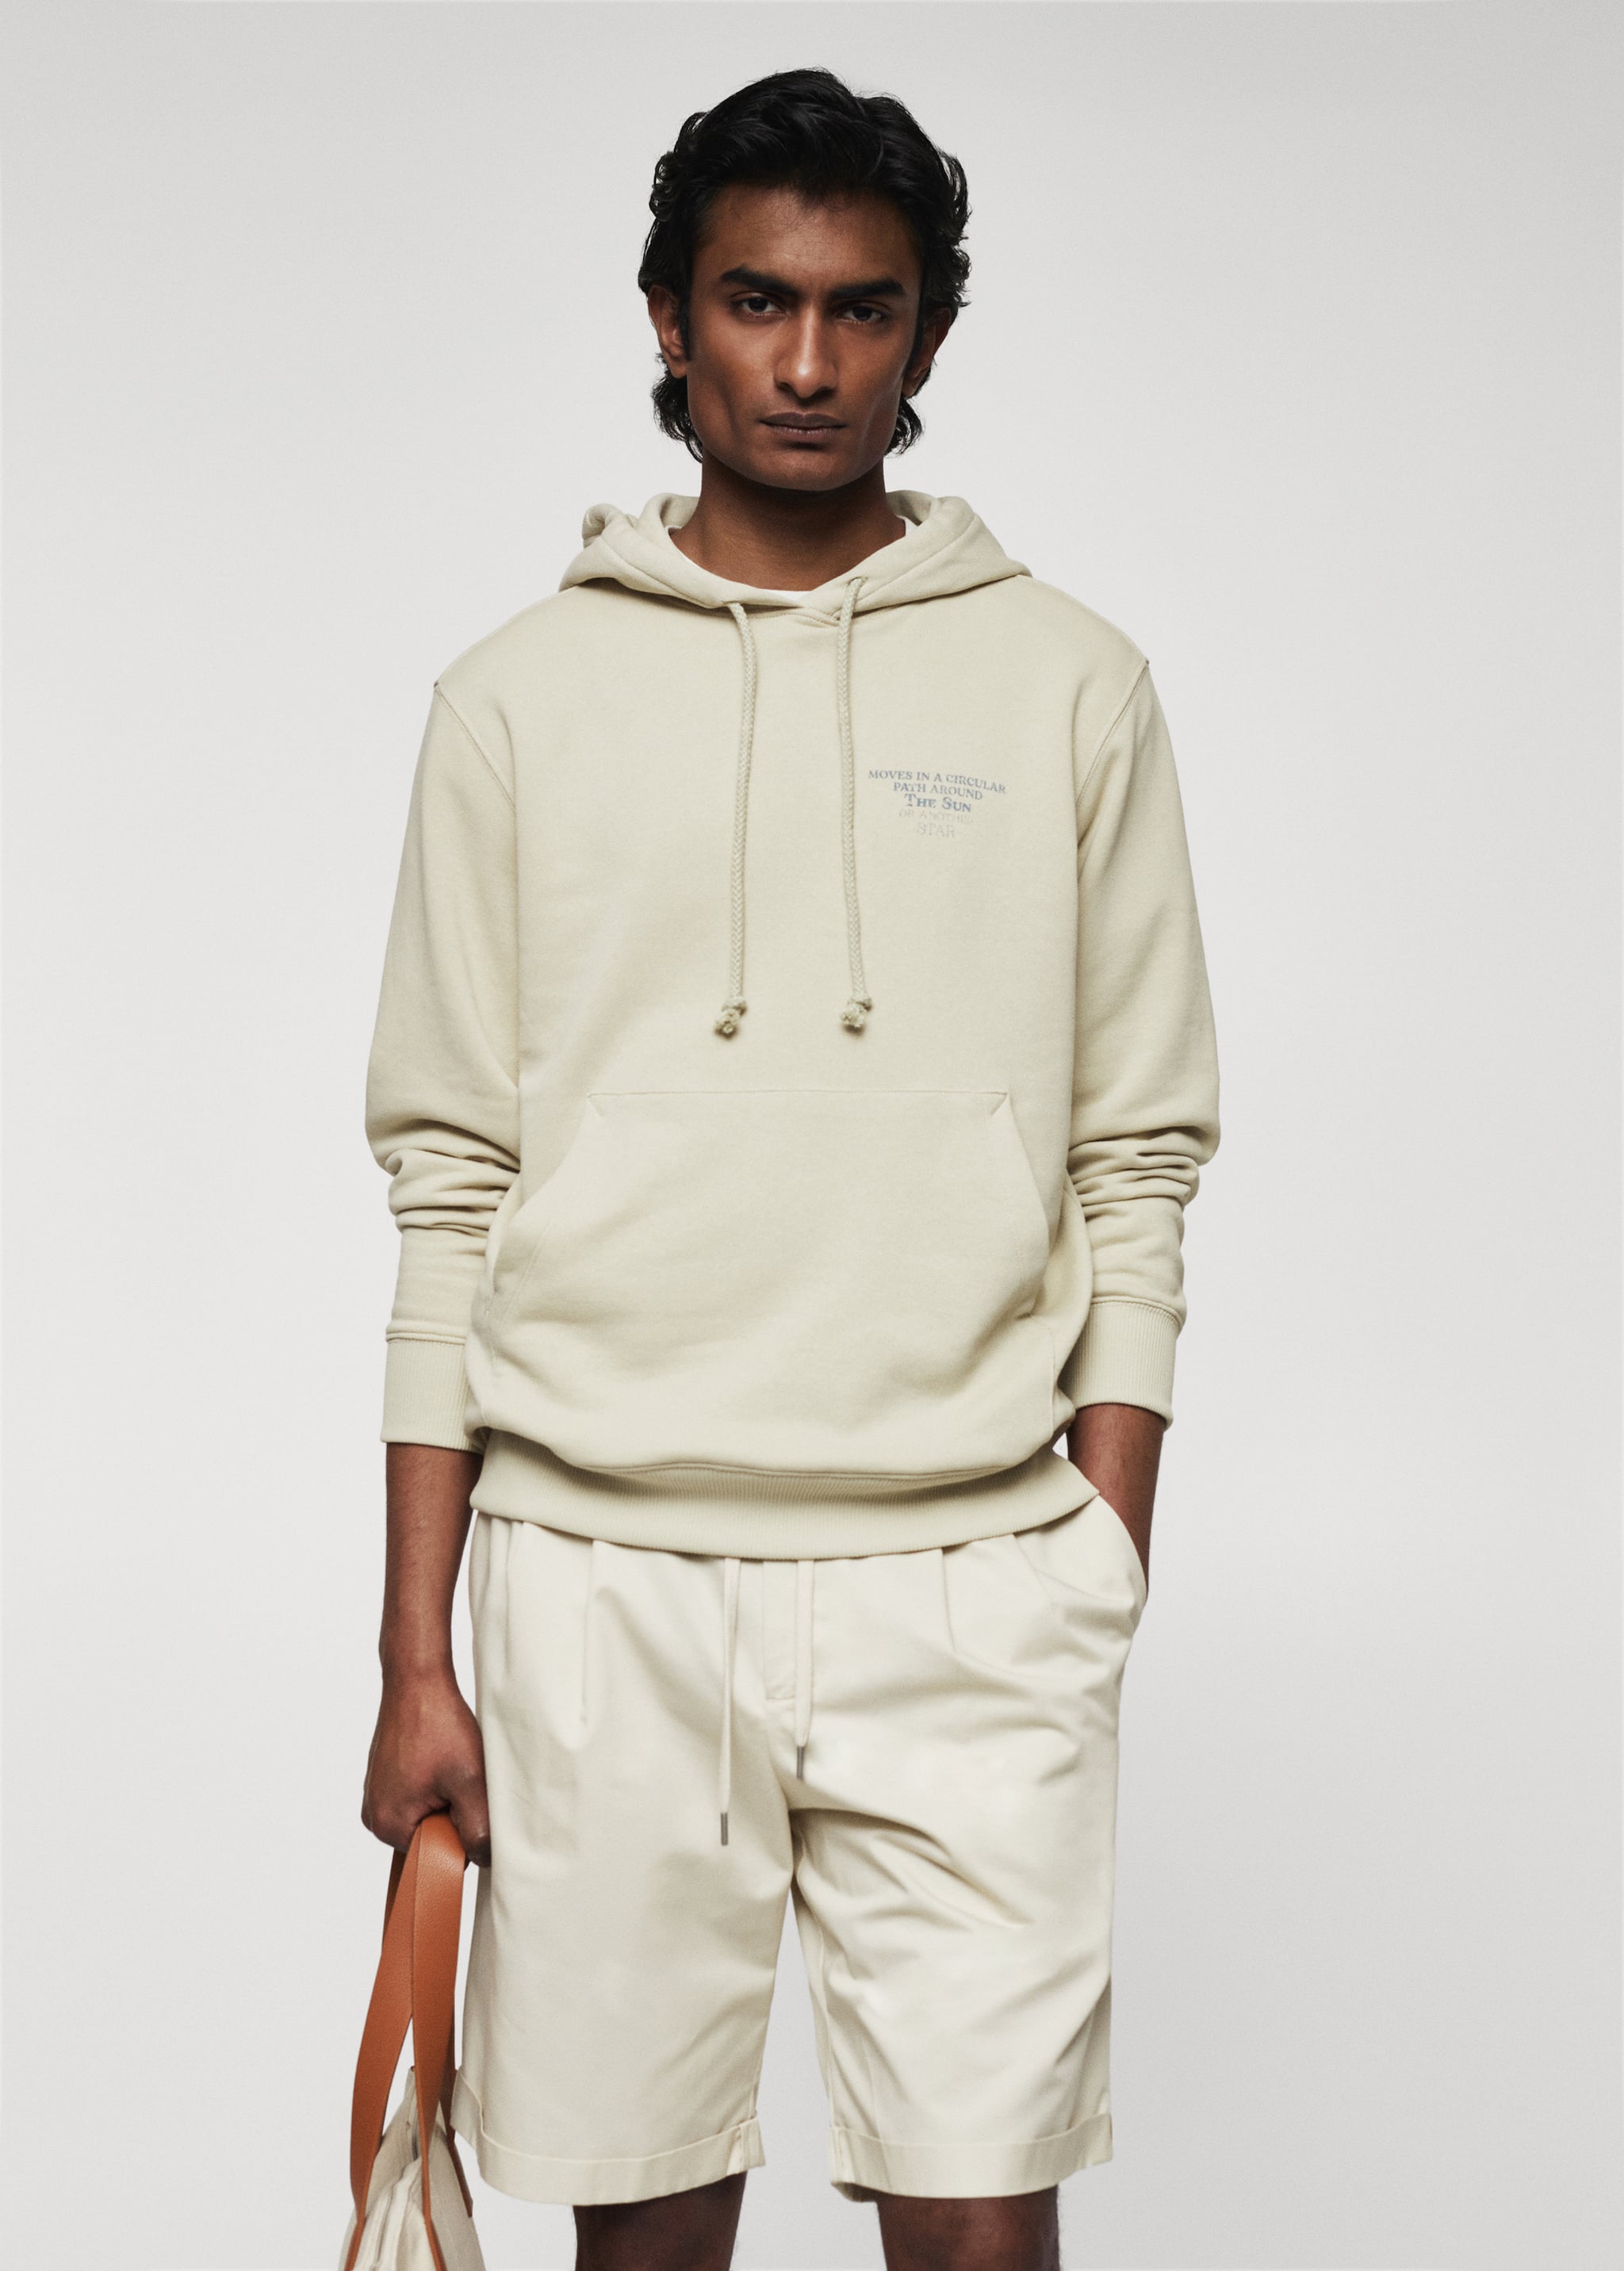 100% cotton hooded sweatshirt text - Medium plane